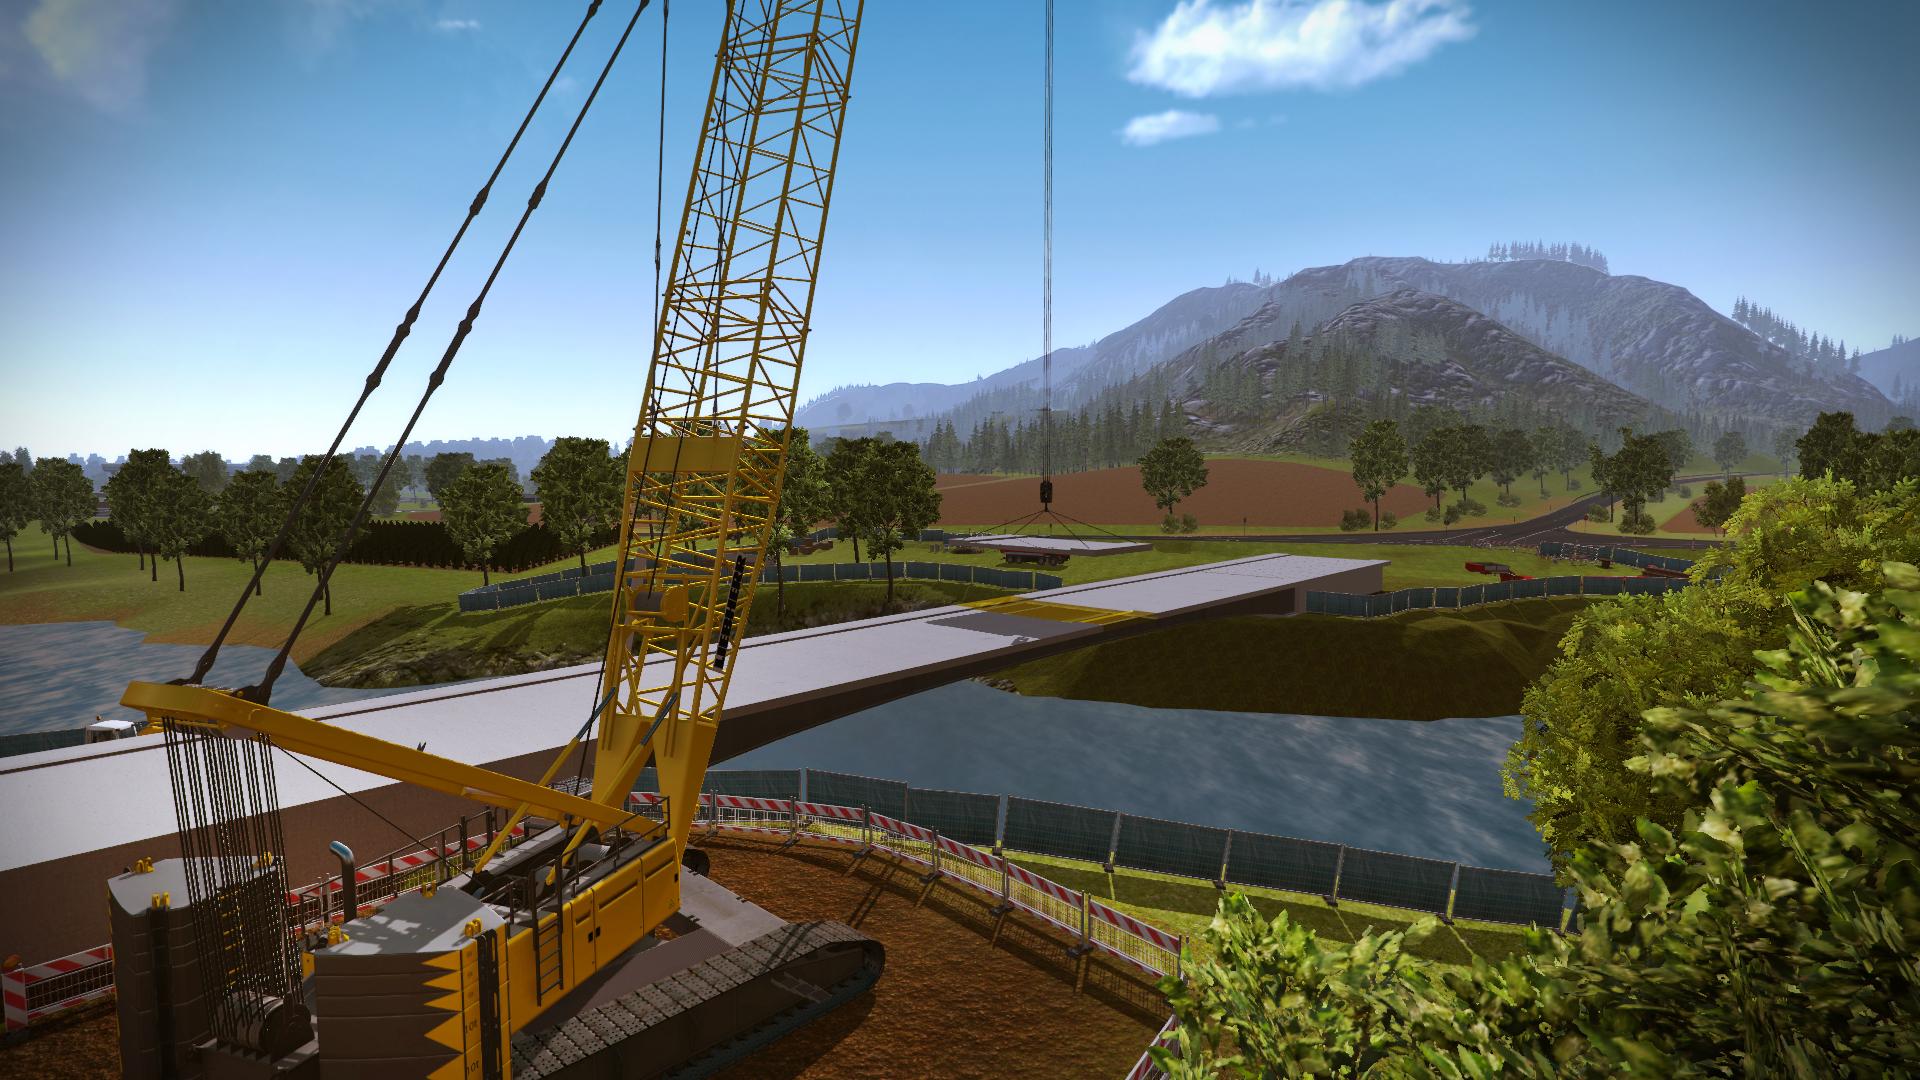 Screenshot №15 from game Construction Simulator 2015